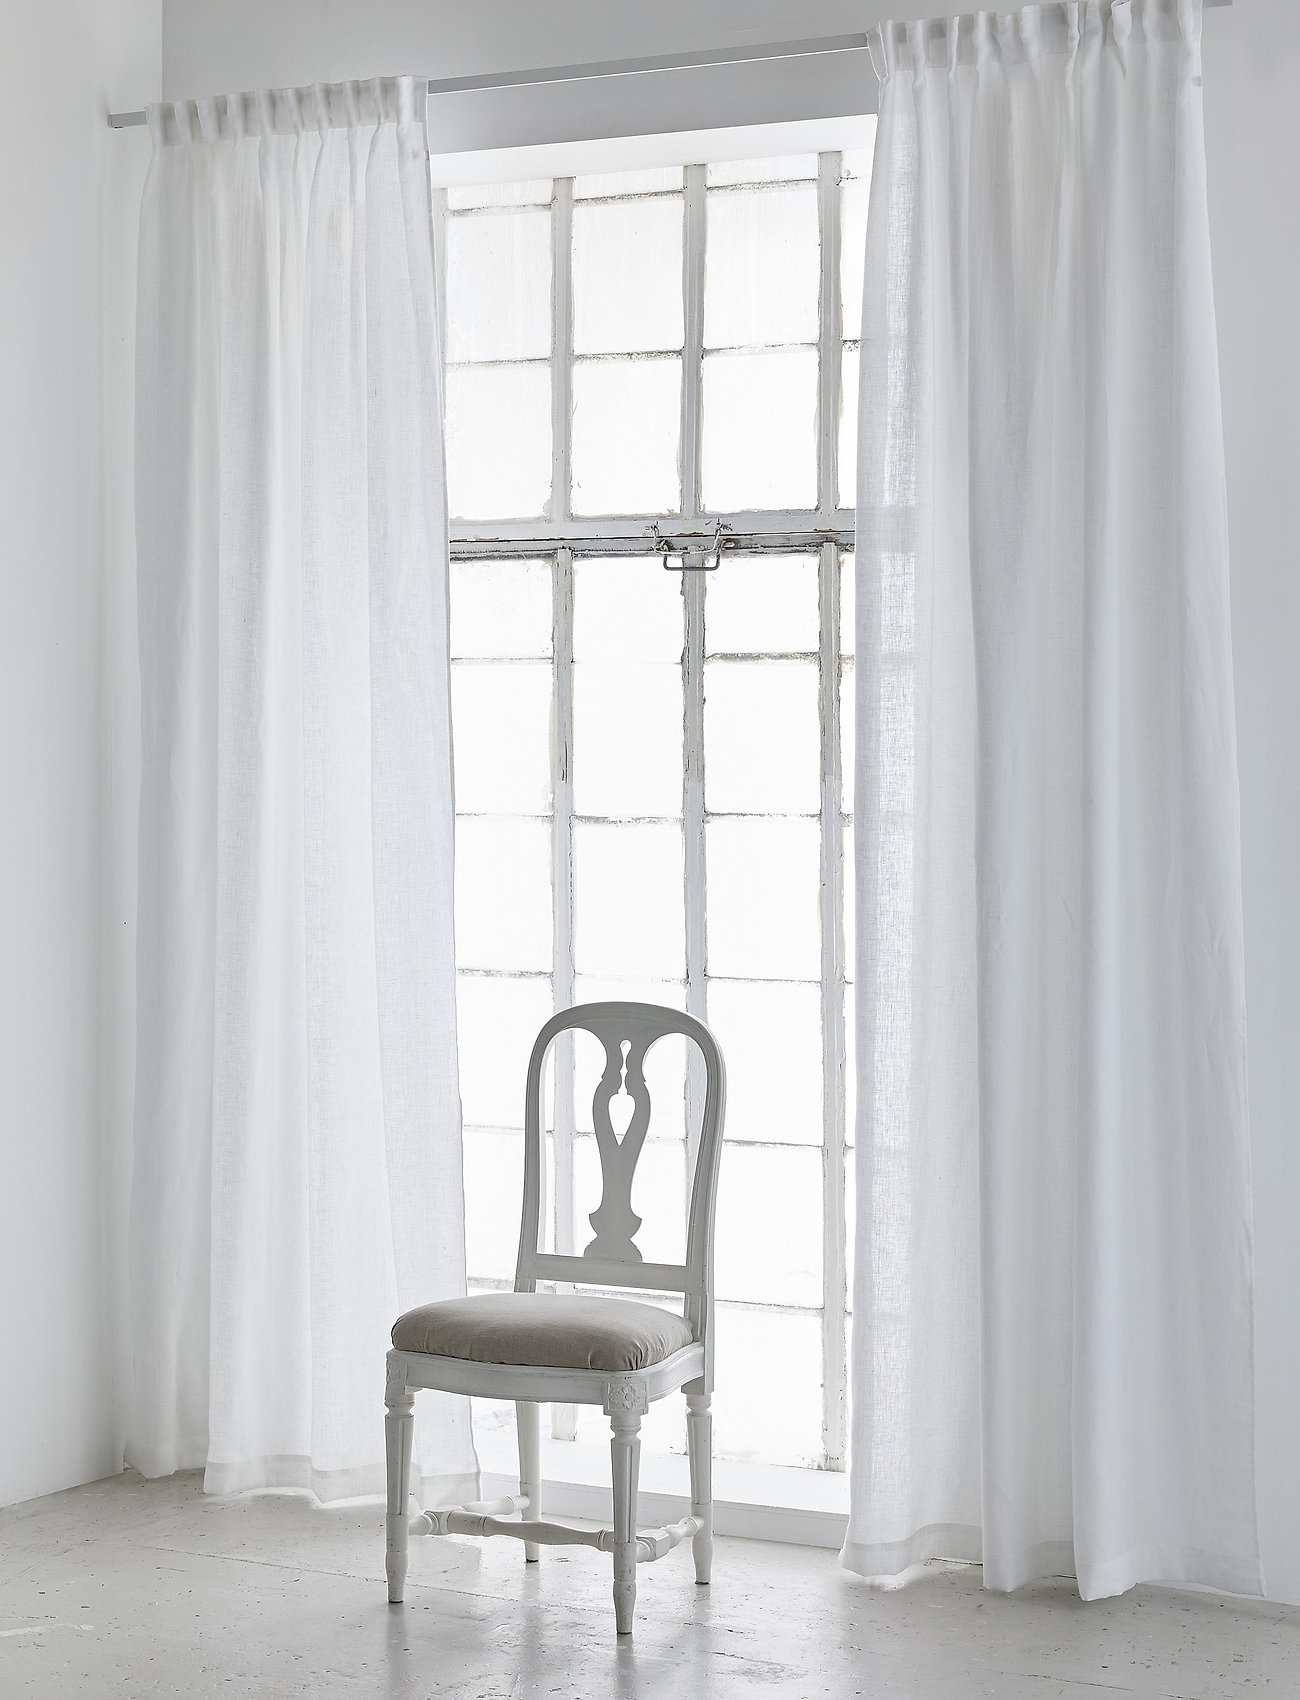 Himla - Springtime Curtain - lange gardiner - white - 1